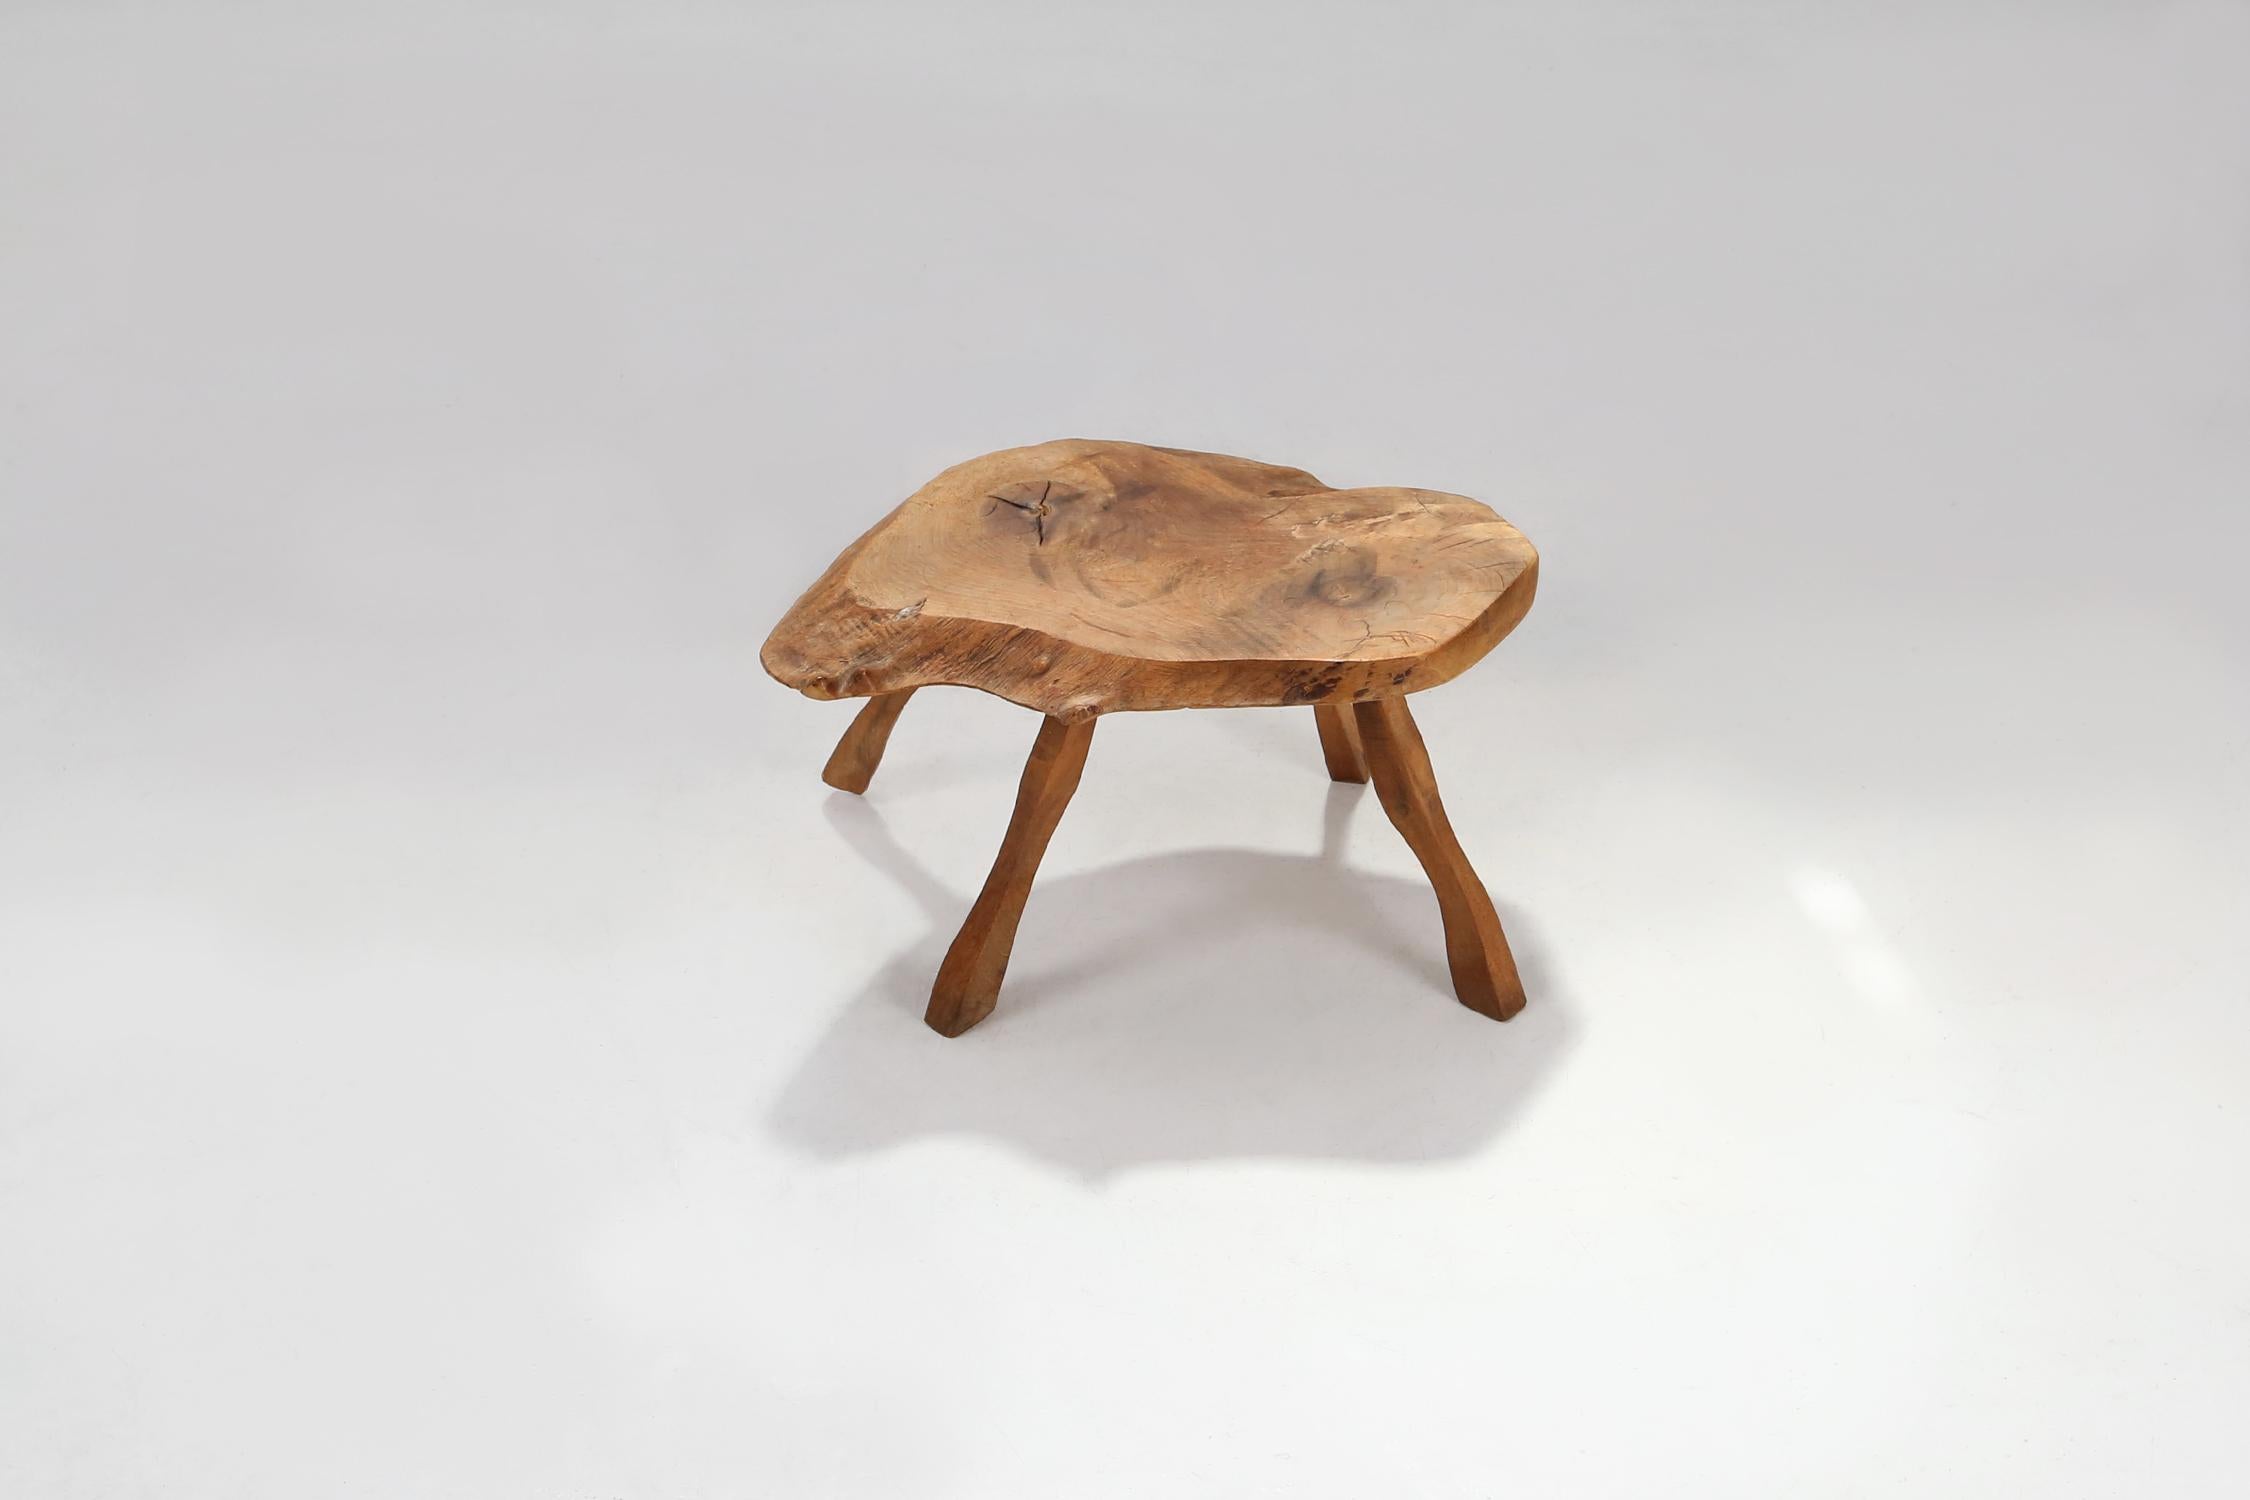 Belgian Rustic Wooden Side Table, 1900